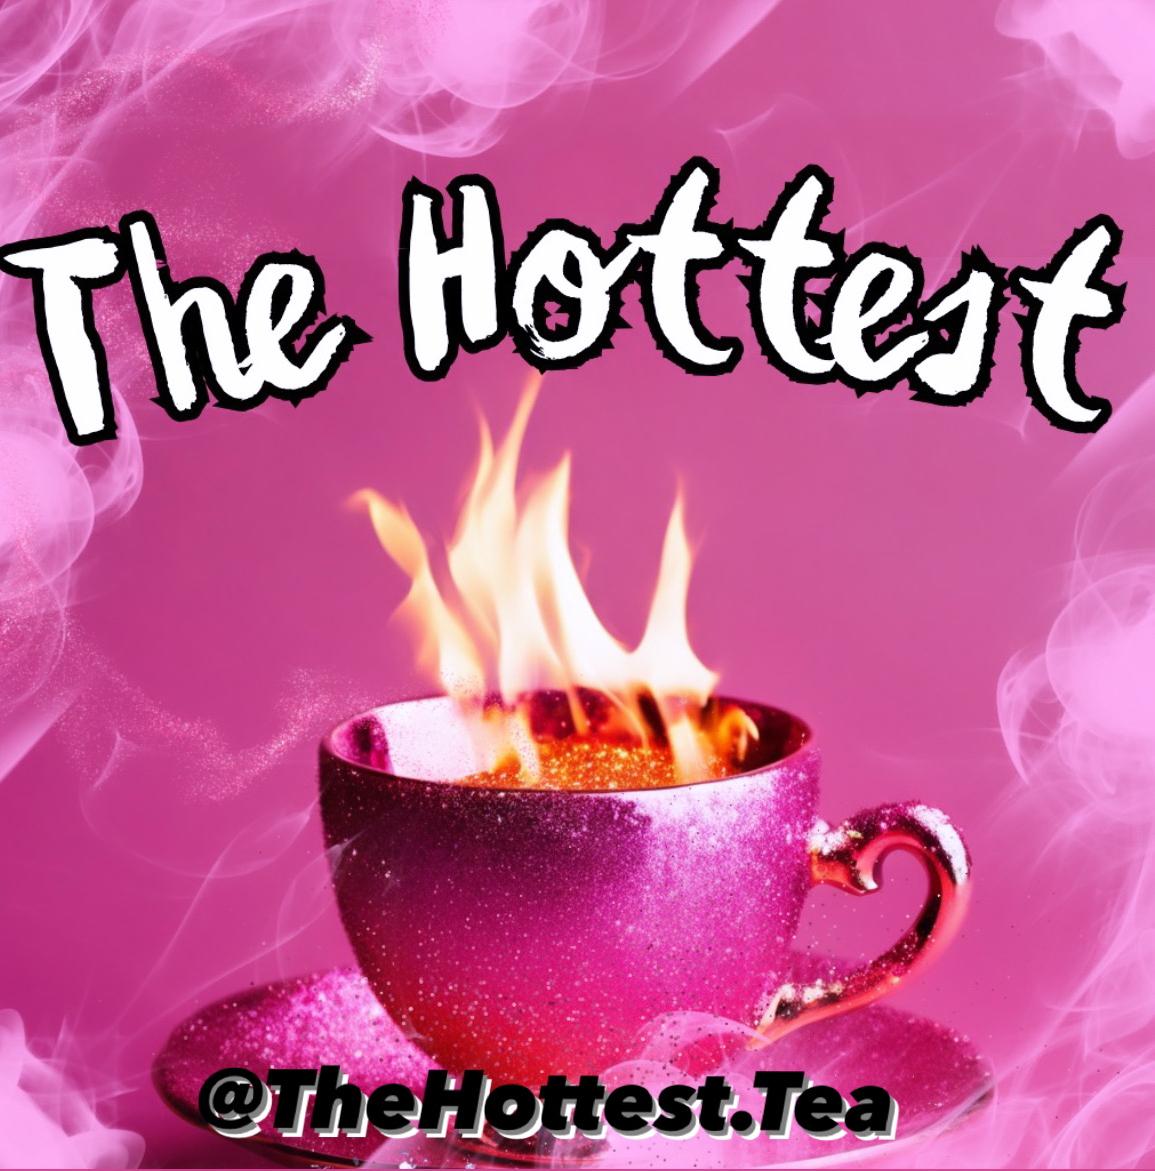 The Hottest tea's images